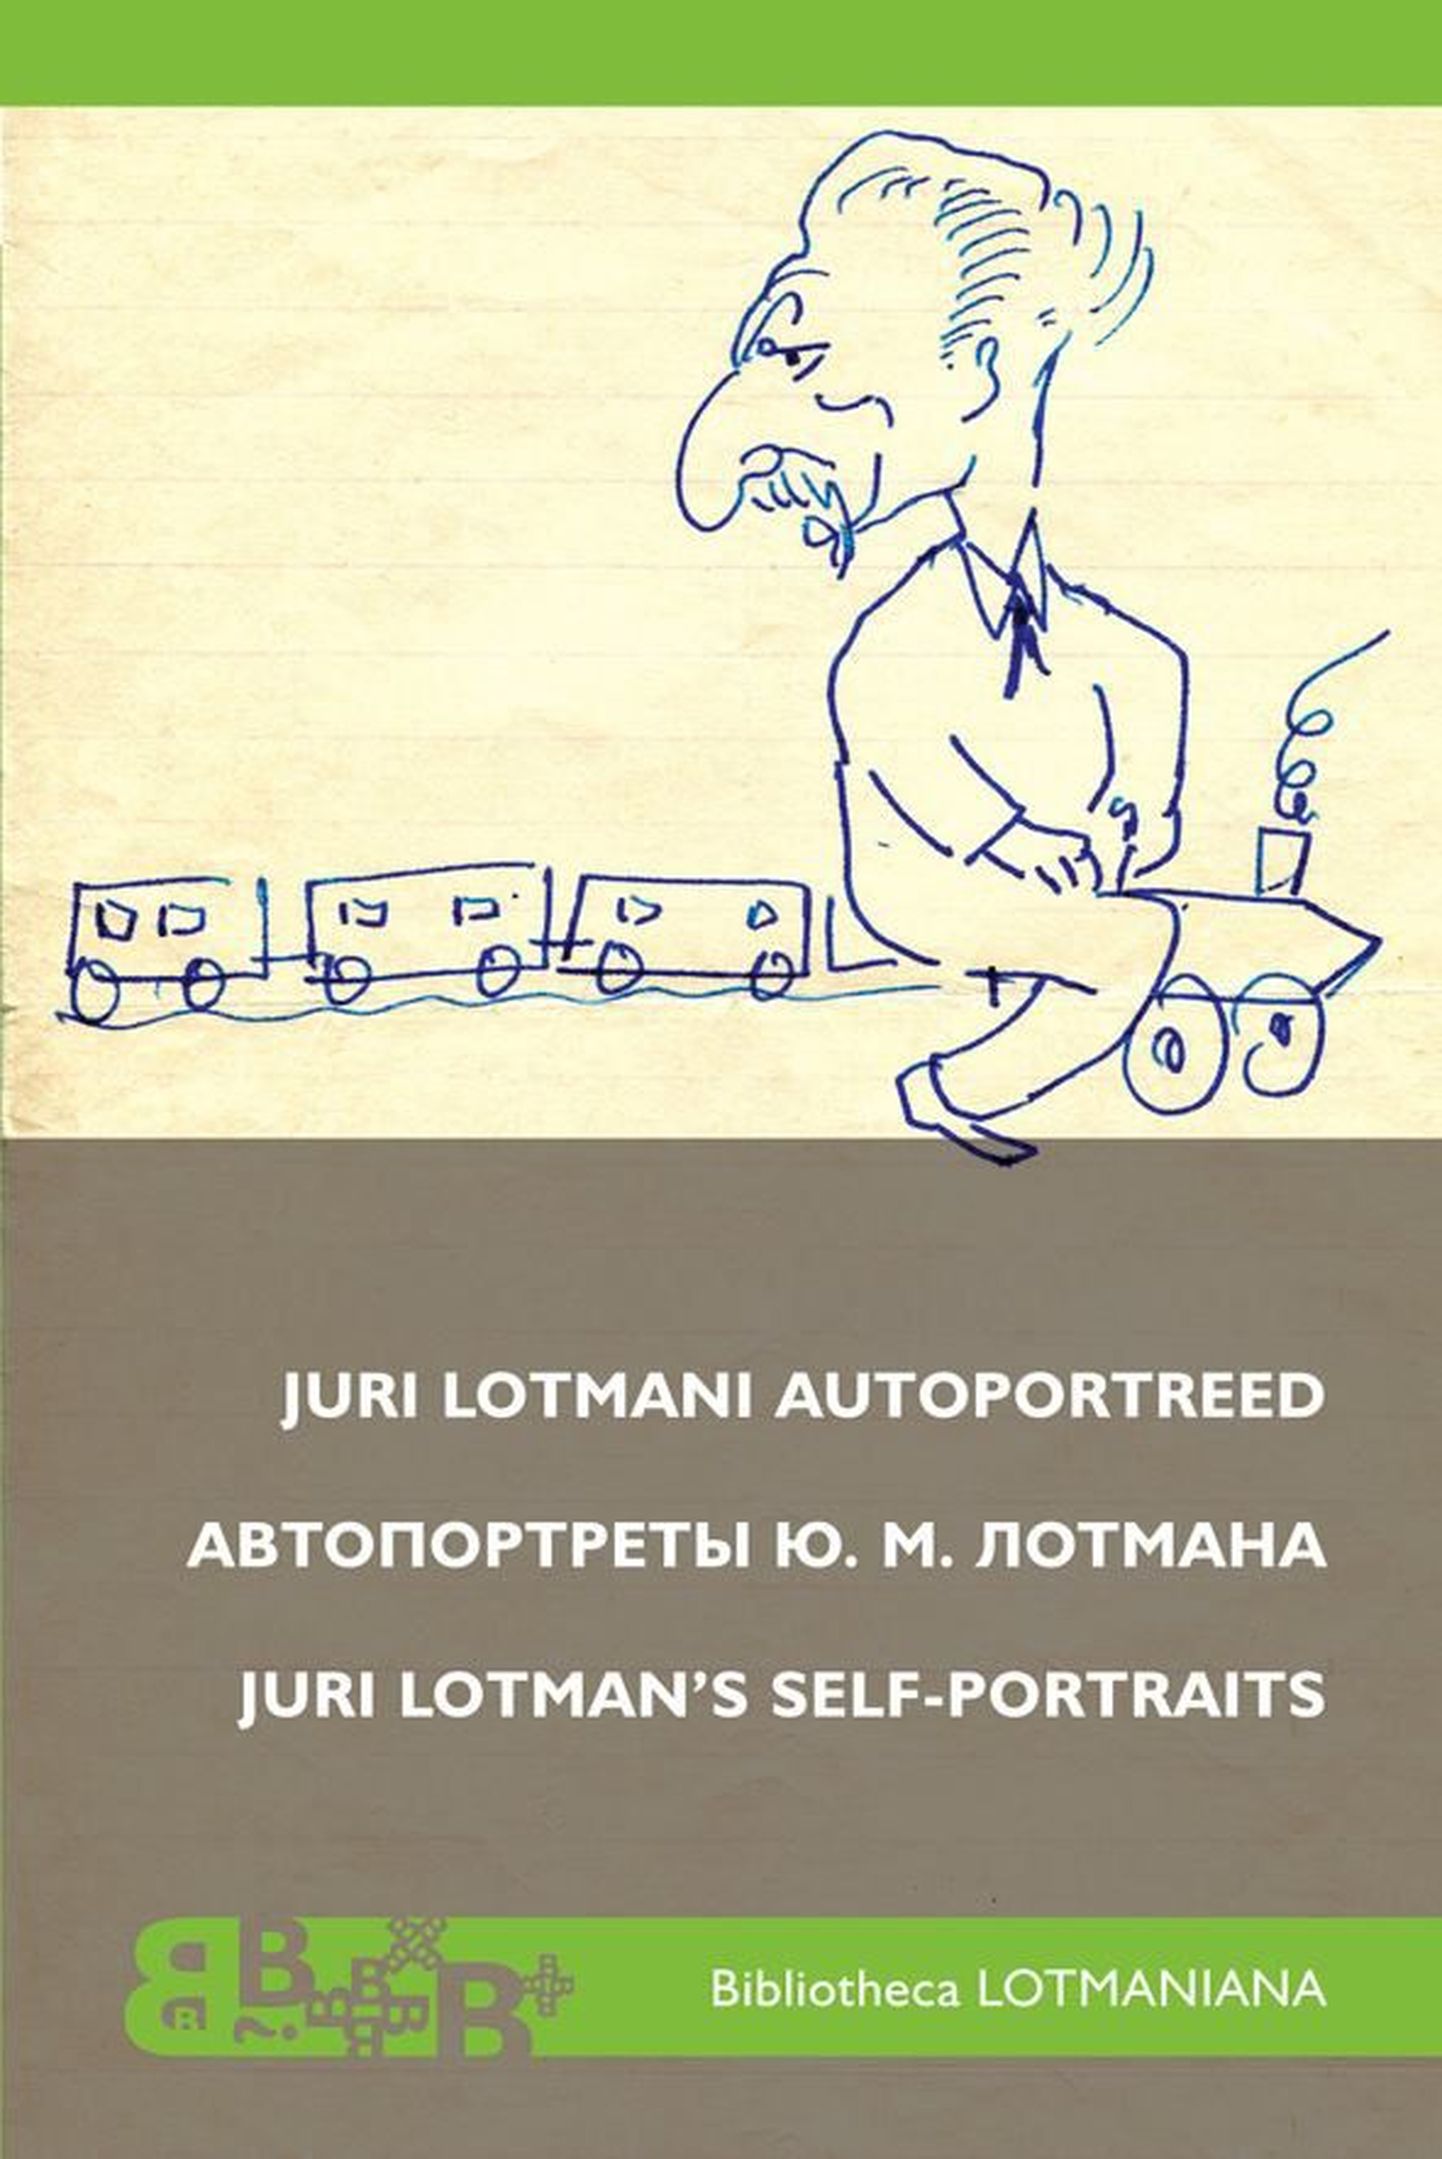 "Juri Lotmani autoportreed"